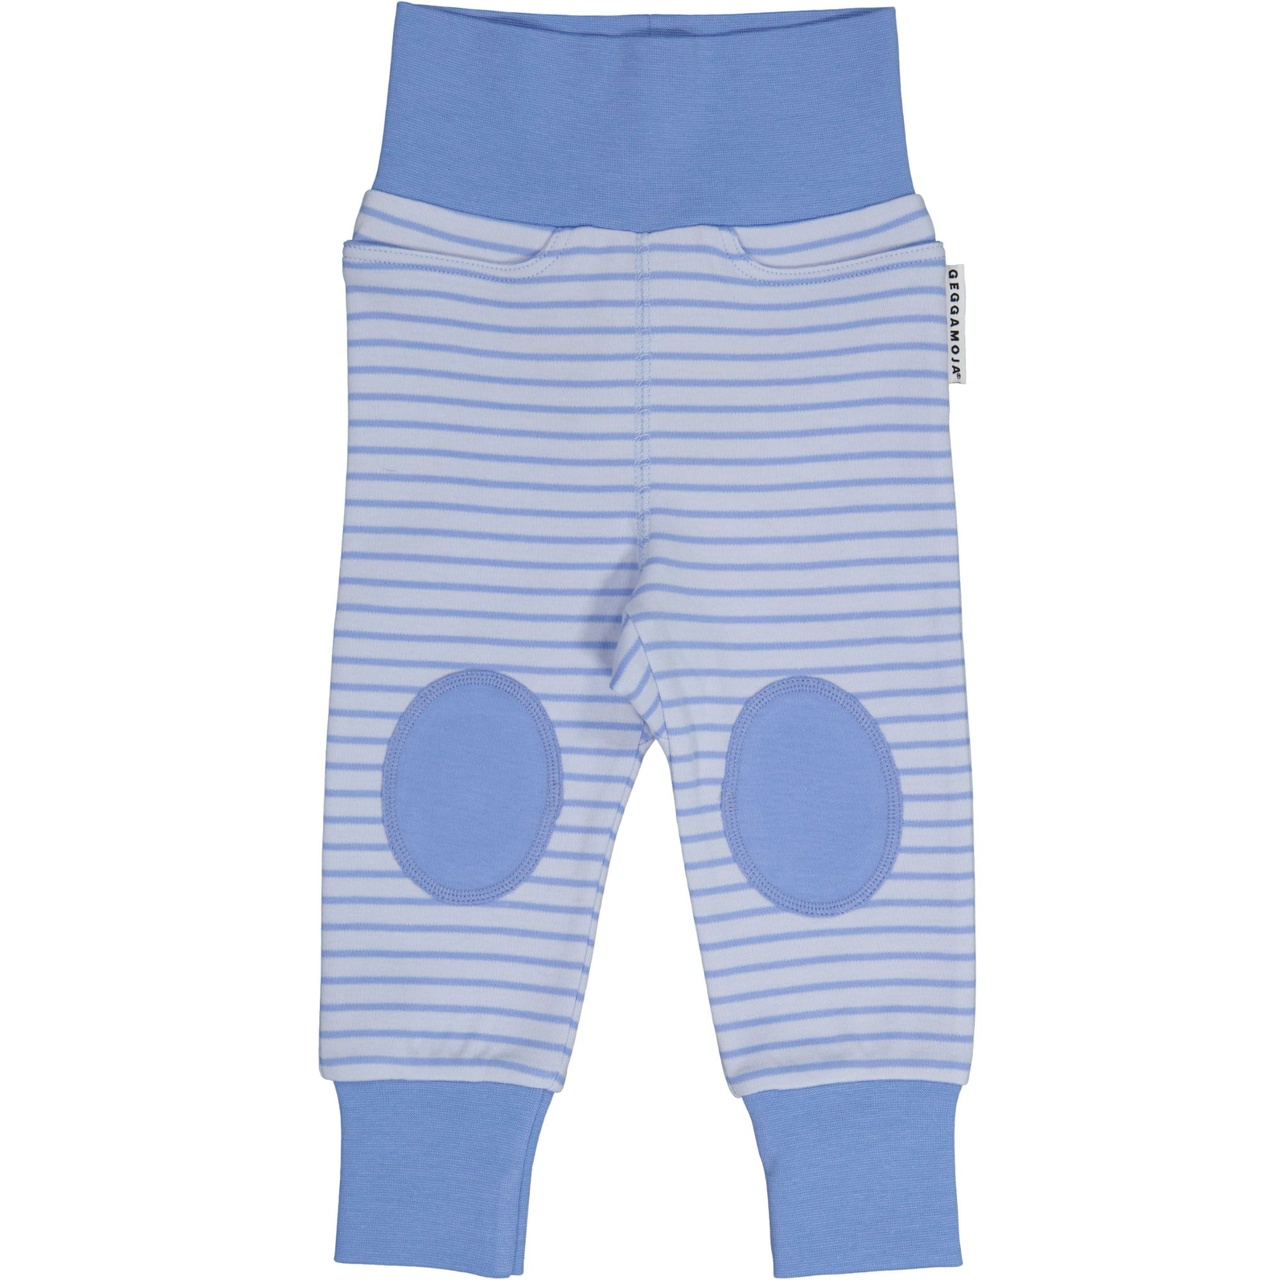 Baby pants Light blue/blue  86/92